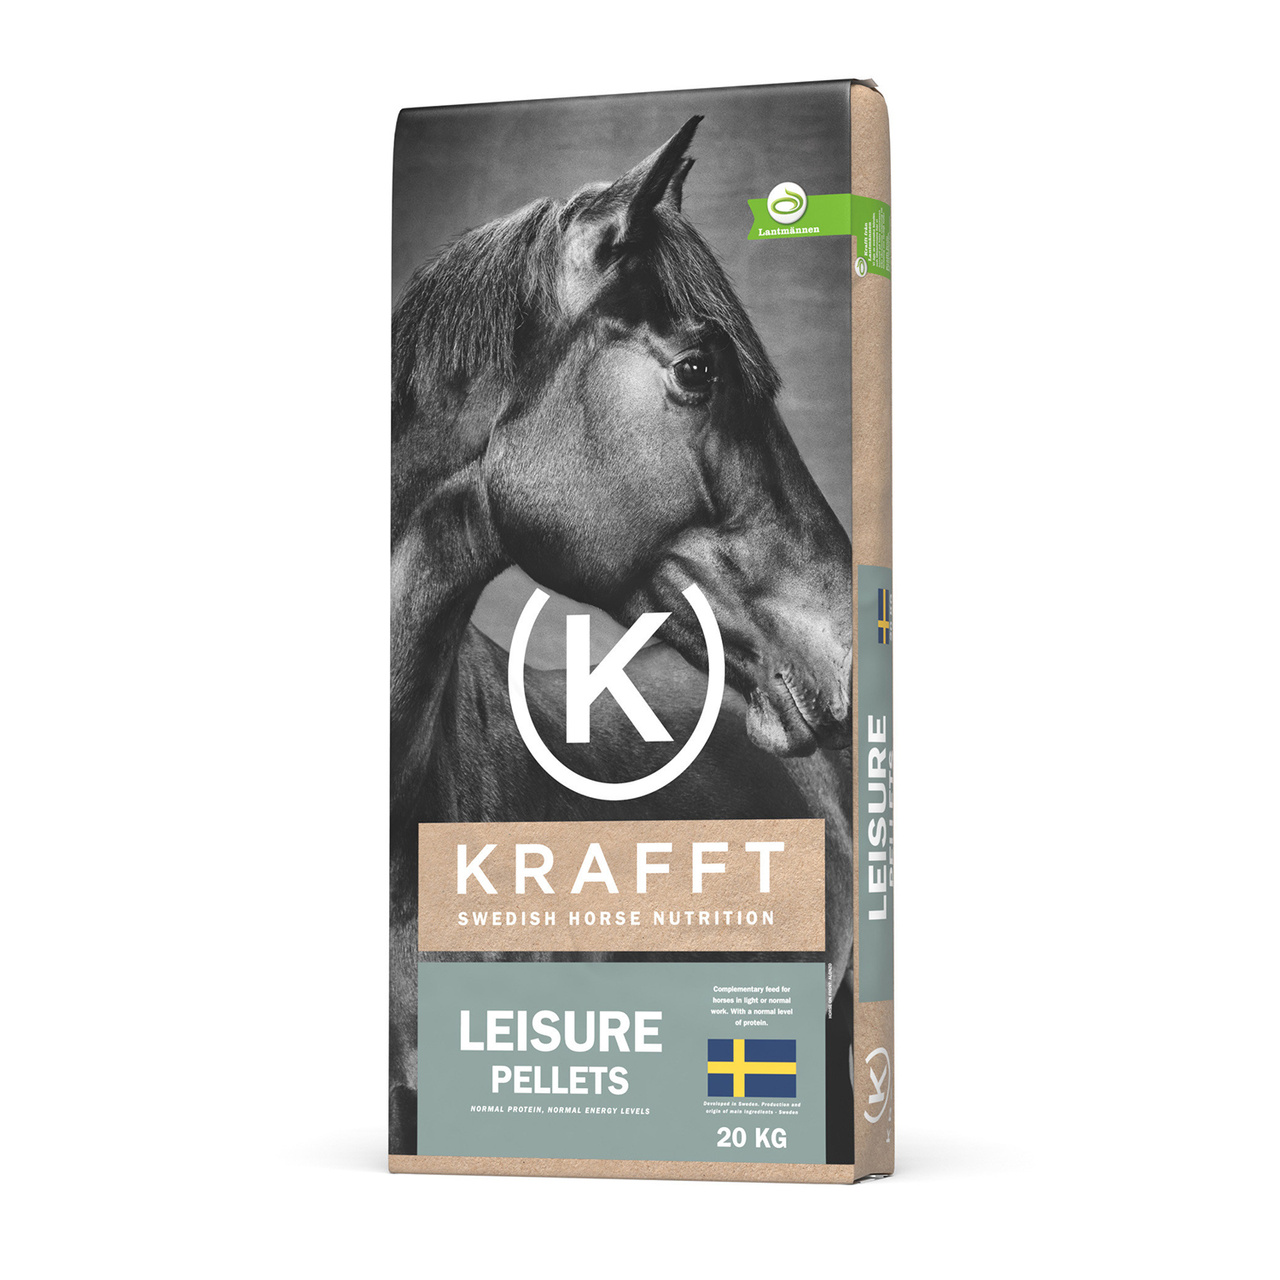 Krafft leisure pellets 20kg